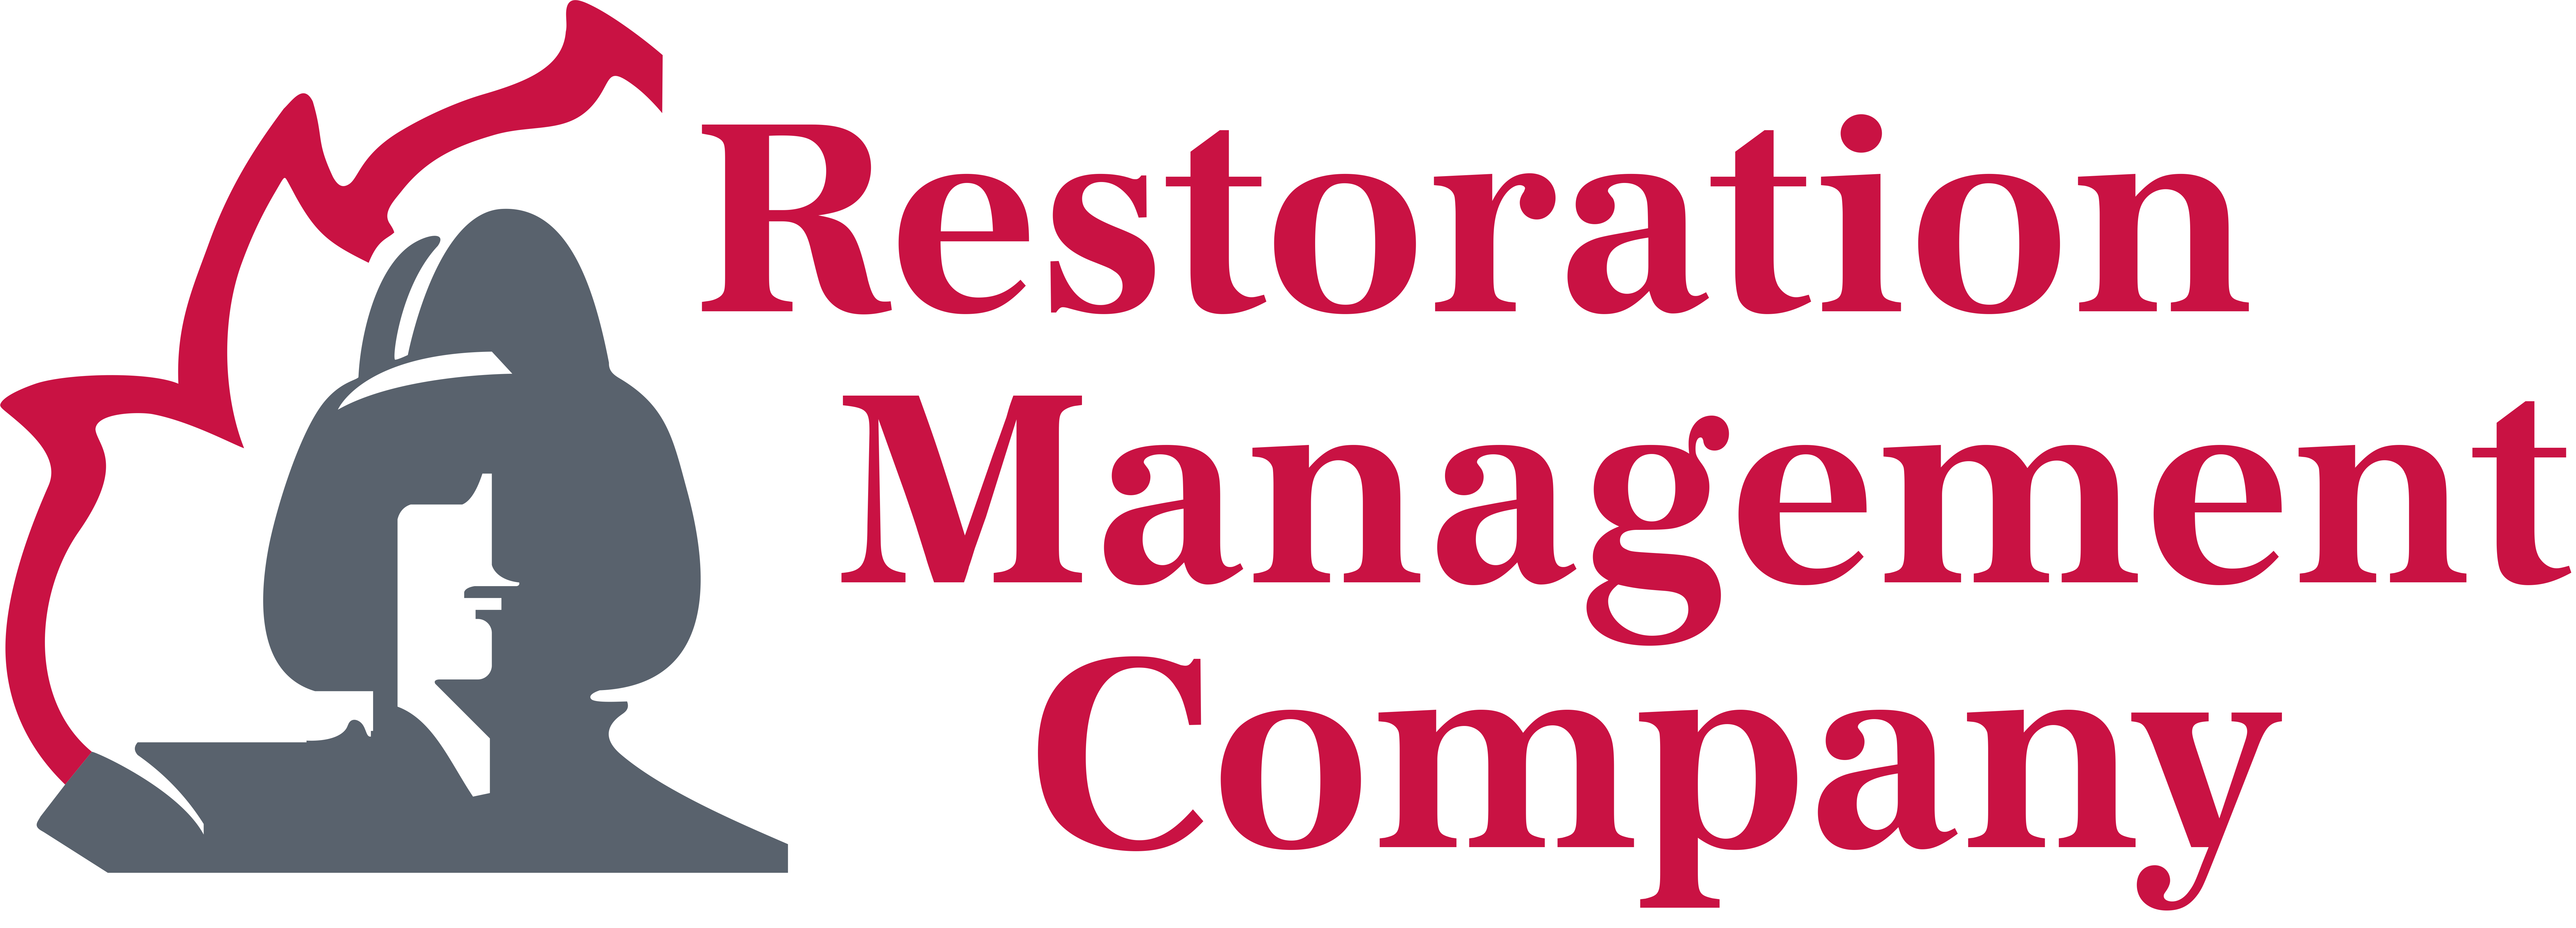 Restoration Management Company logo